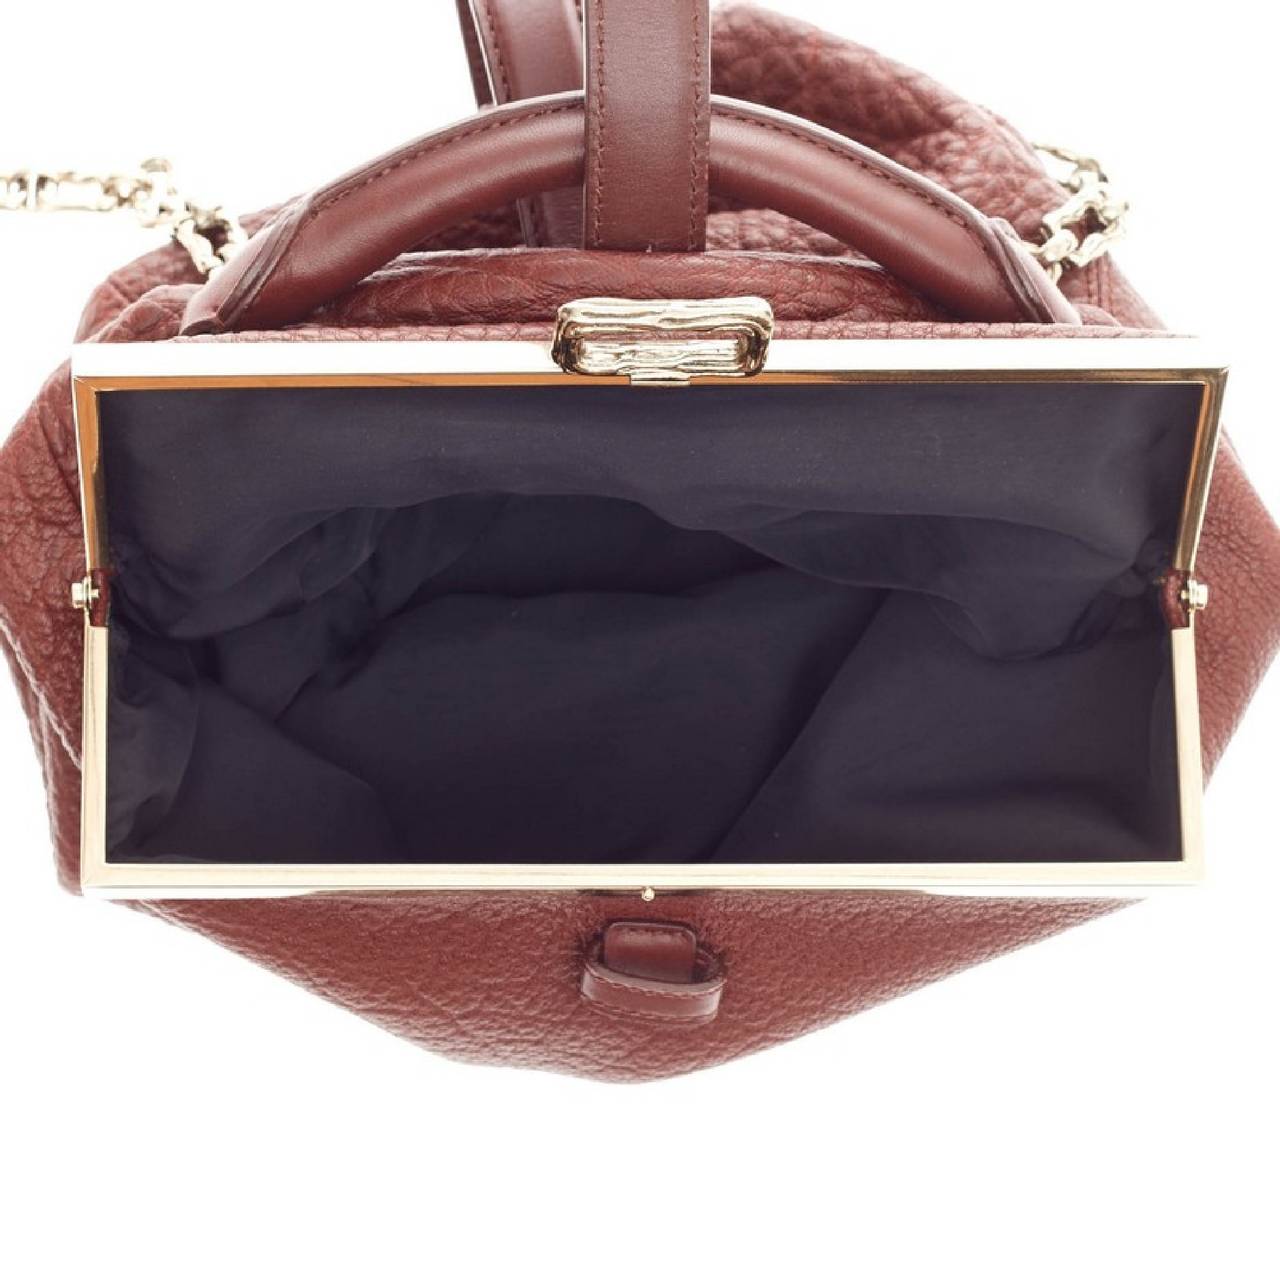 Alexander Wang Willow Frame Messenger Bag Pebbled leather 2